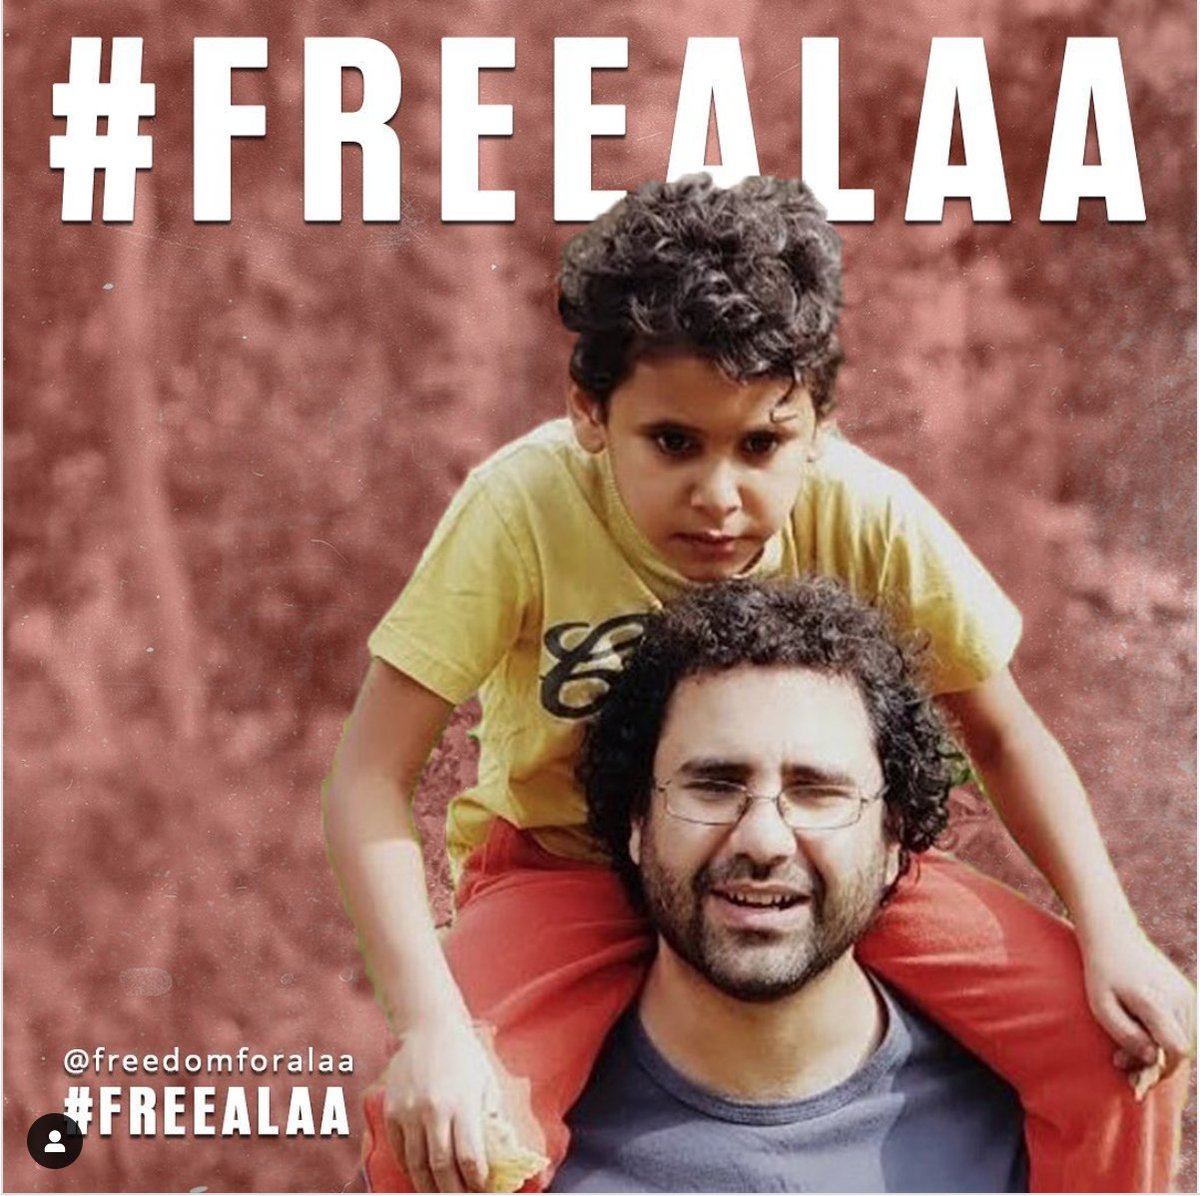 💥URGENT: Take action now to #FreeAlaa
1. Write to your MP (UK) tinyurl.com/yxwjkbrk
2. Write to ongress (US) tinyurl.com/4xm6wy8n
3. Sign our petition (World) tinyurl.com/5n985xrj
4. Share & Follow @FreedomForAlaa !
5. Tweet @RishiSunak @JamesCleverly to #FreeAlaa